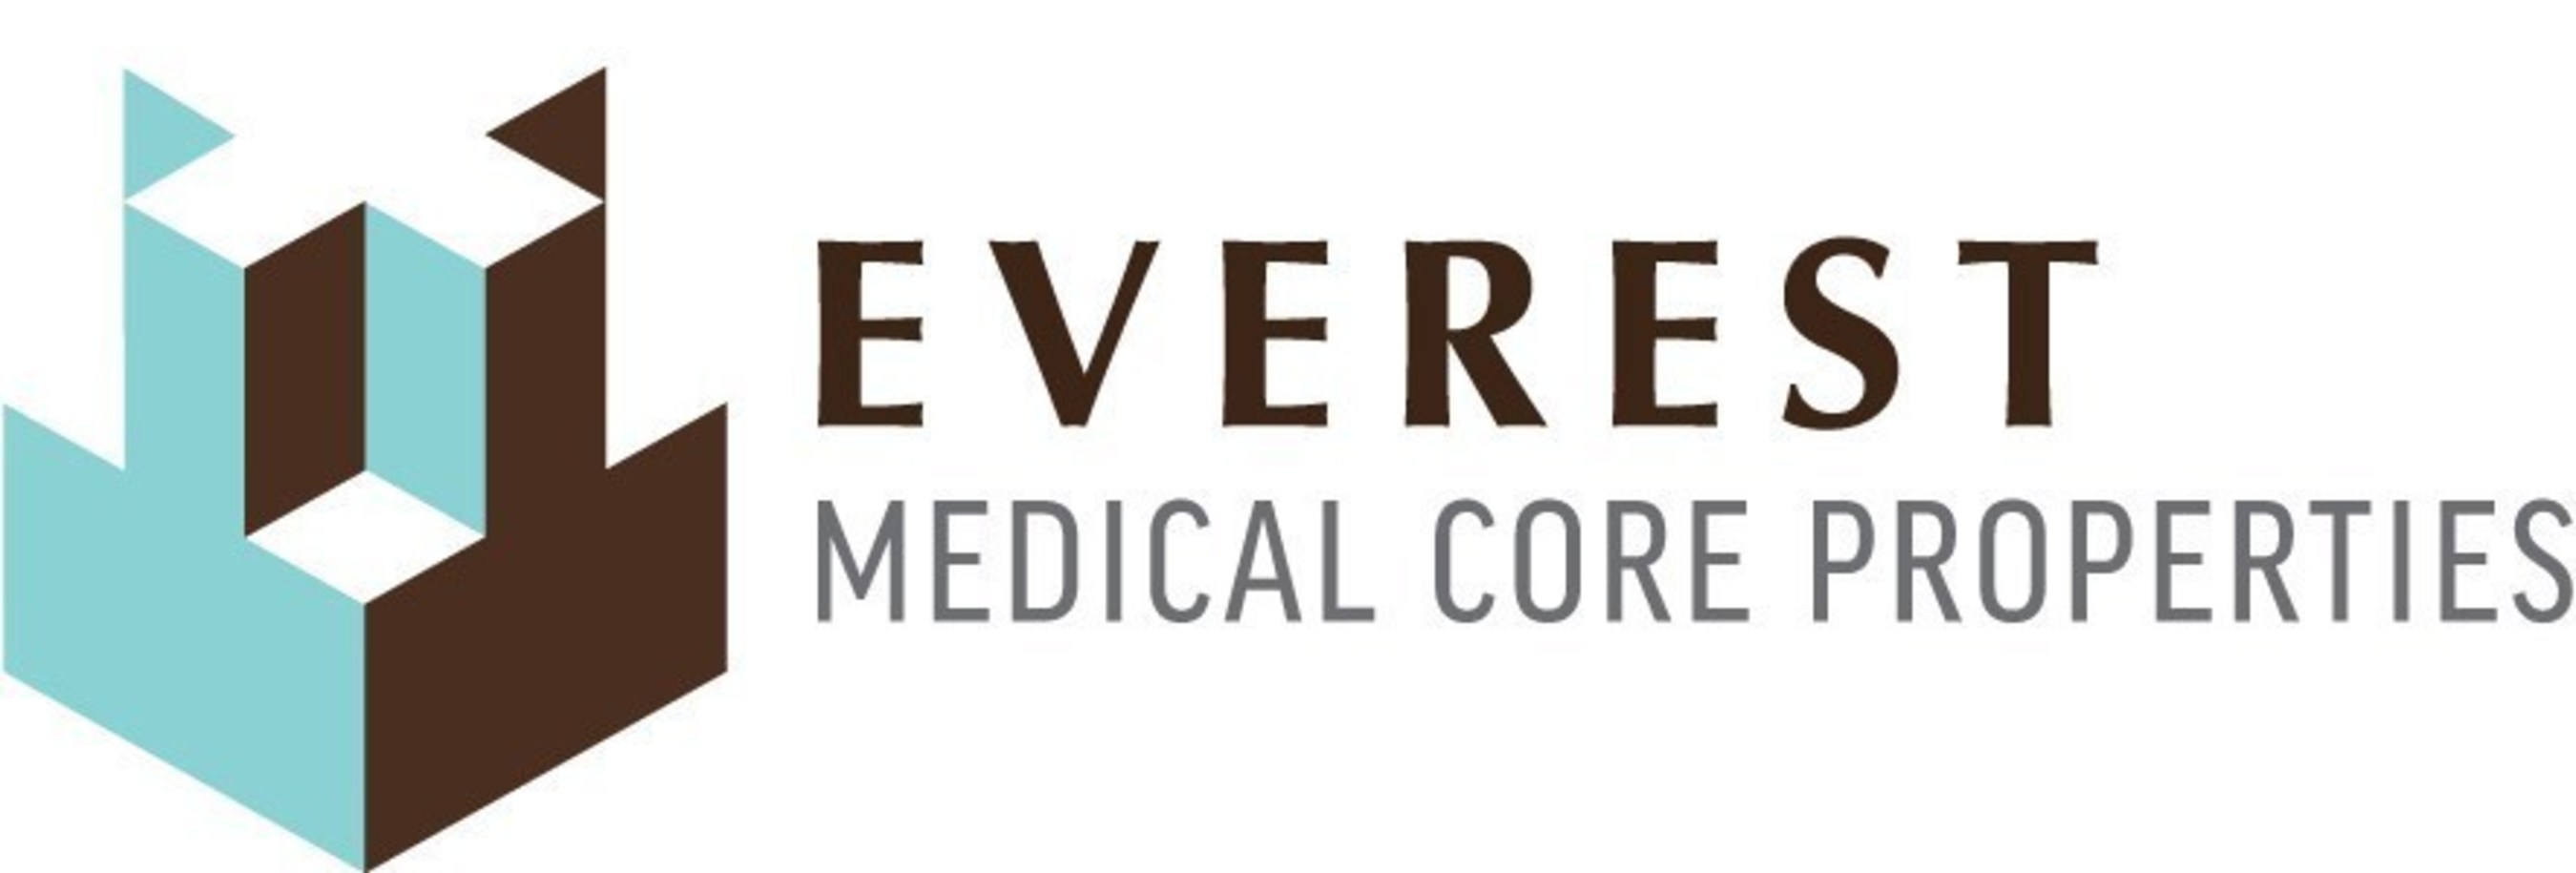 Everest Medical Core Properties